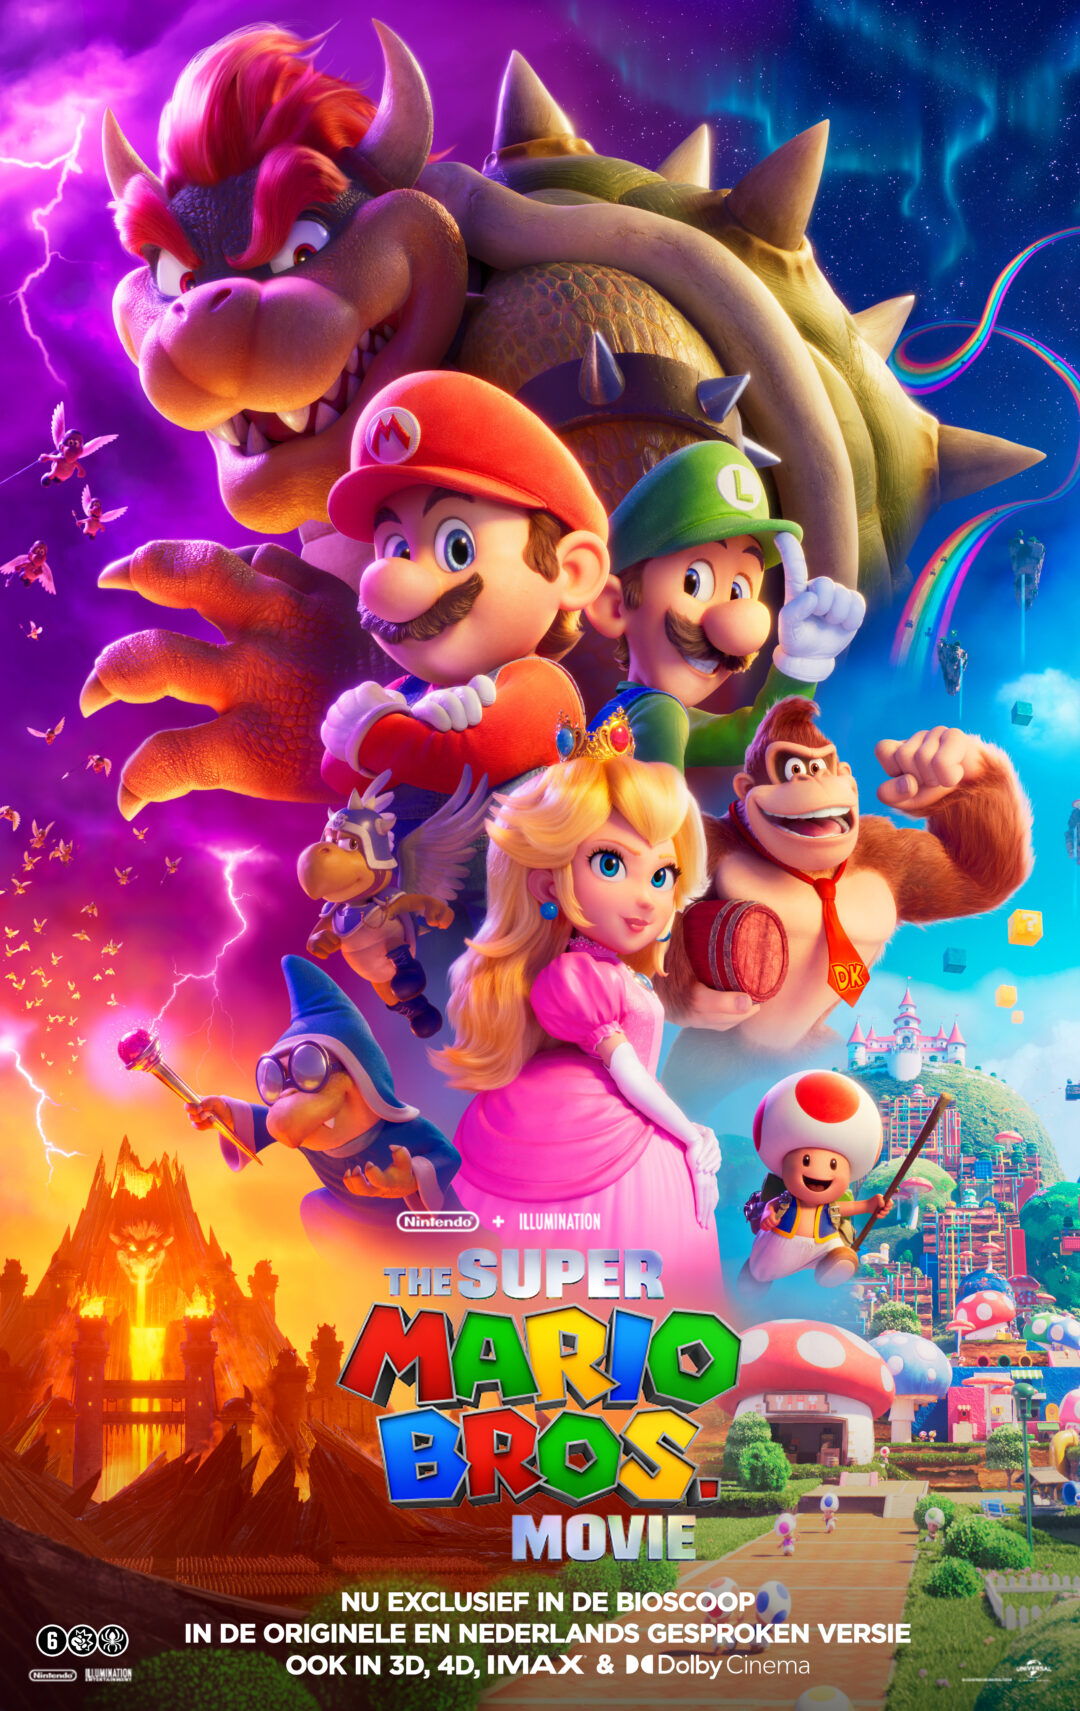 The-Super-Mario-Bros-Movie-NL-_ps_1_jpg_sd-high_Copyright-2022-Nintendo-and-Universal-Studios.jpg